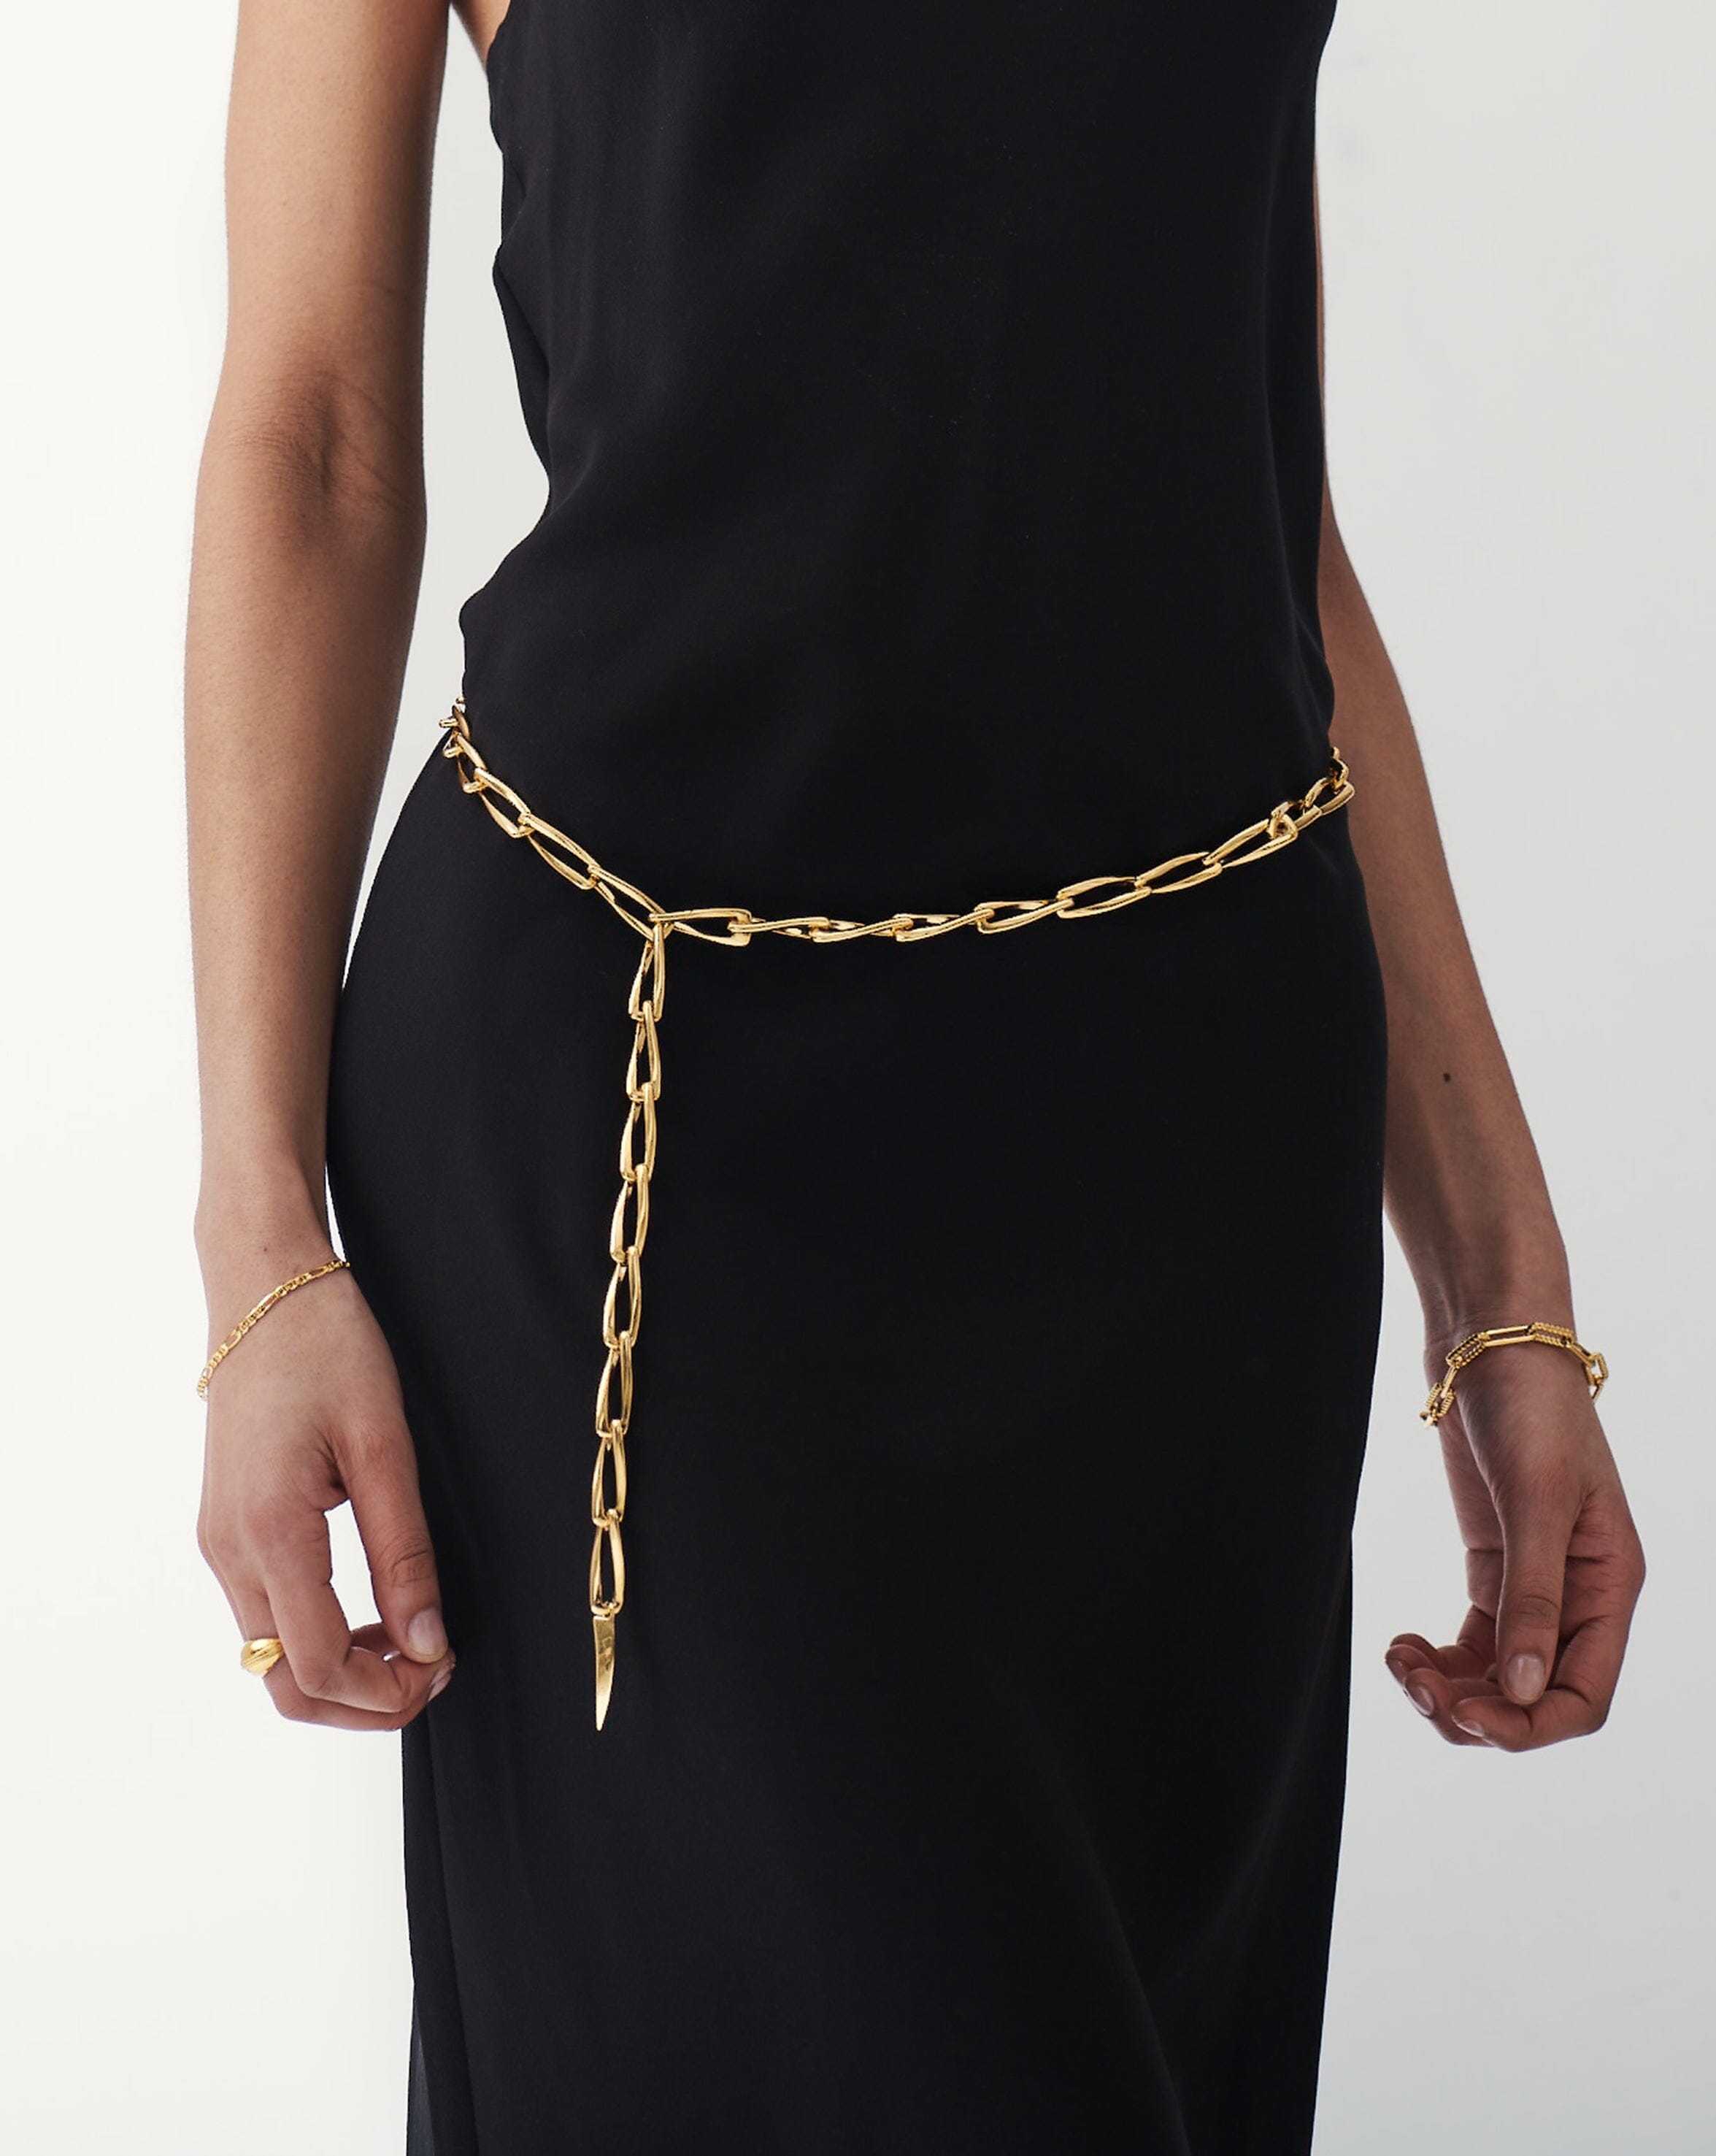  TOURZOO Metal Chain Belt for Women Adjustable Waist